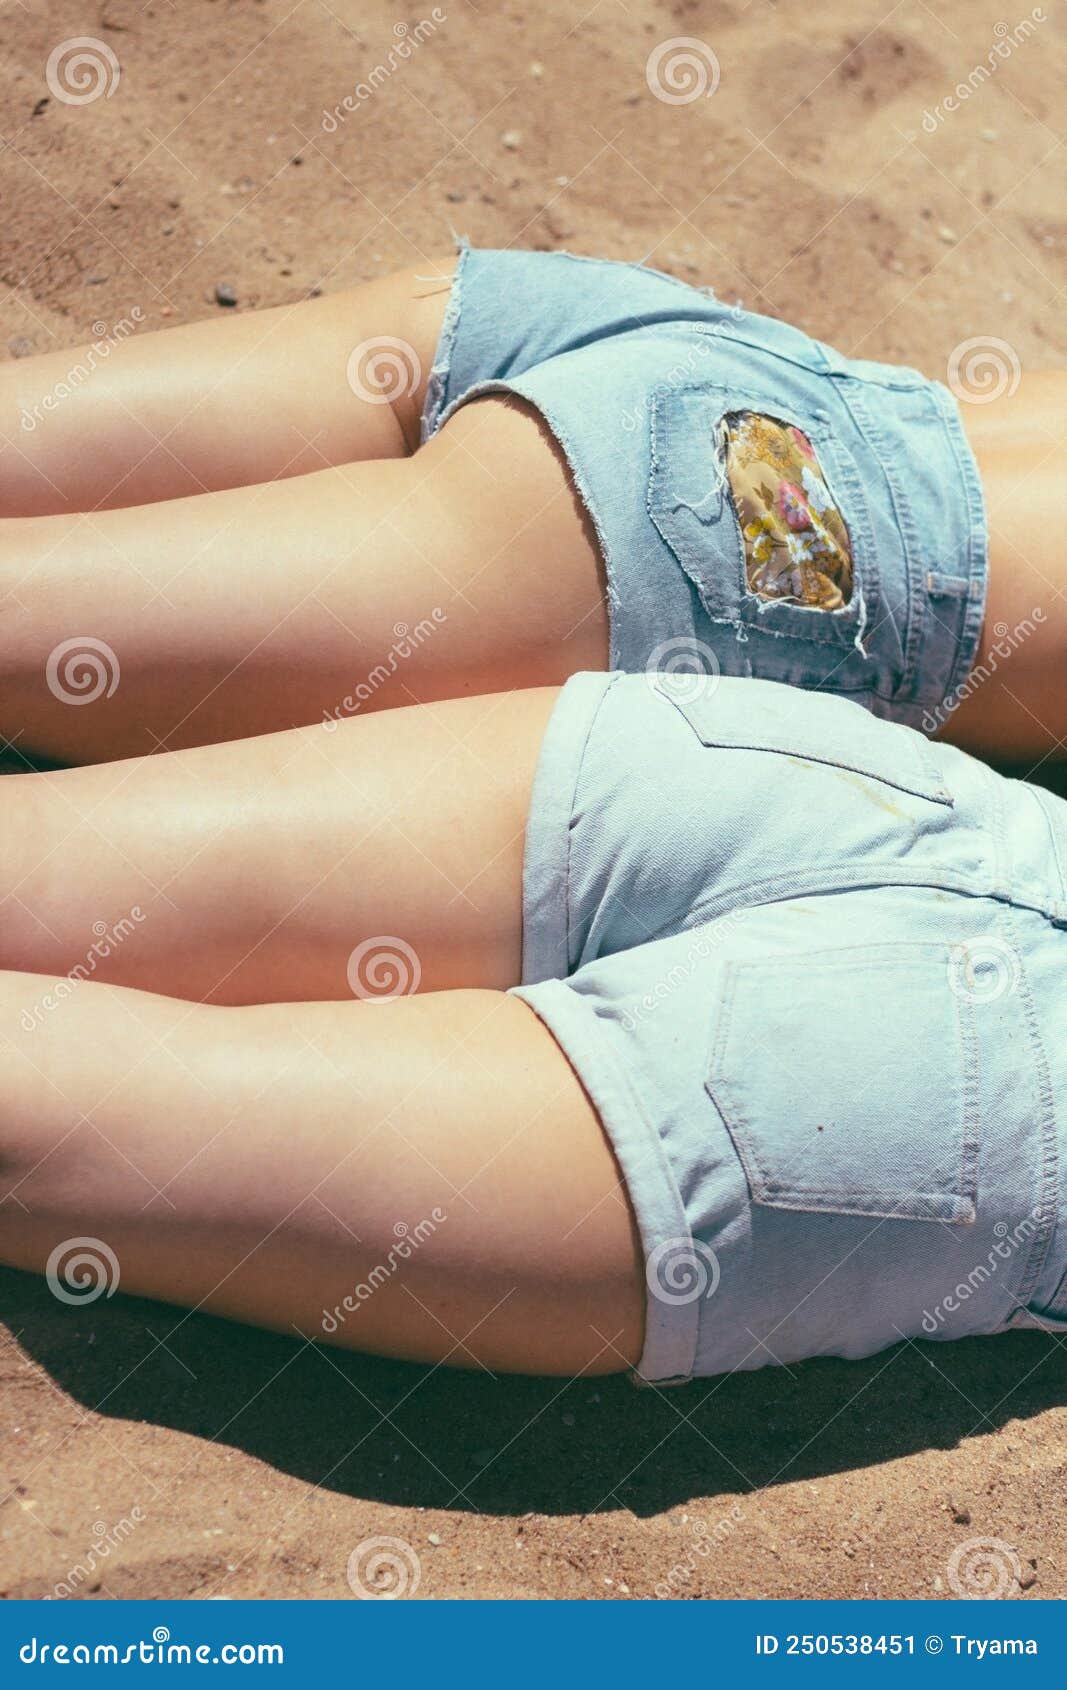 bogdan botis recommends girls in shorts pics pic